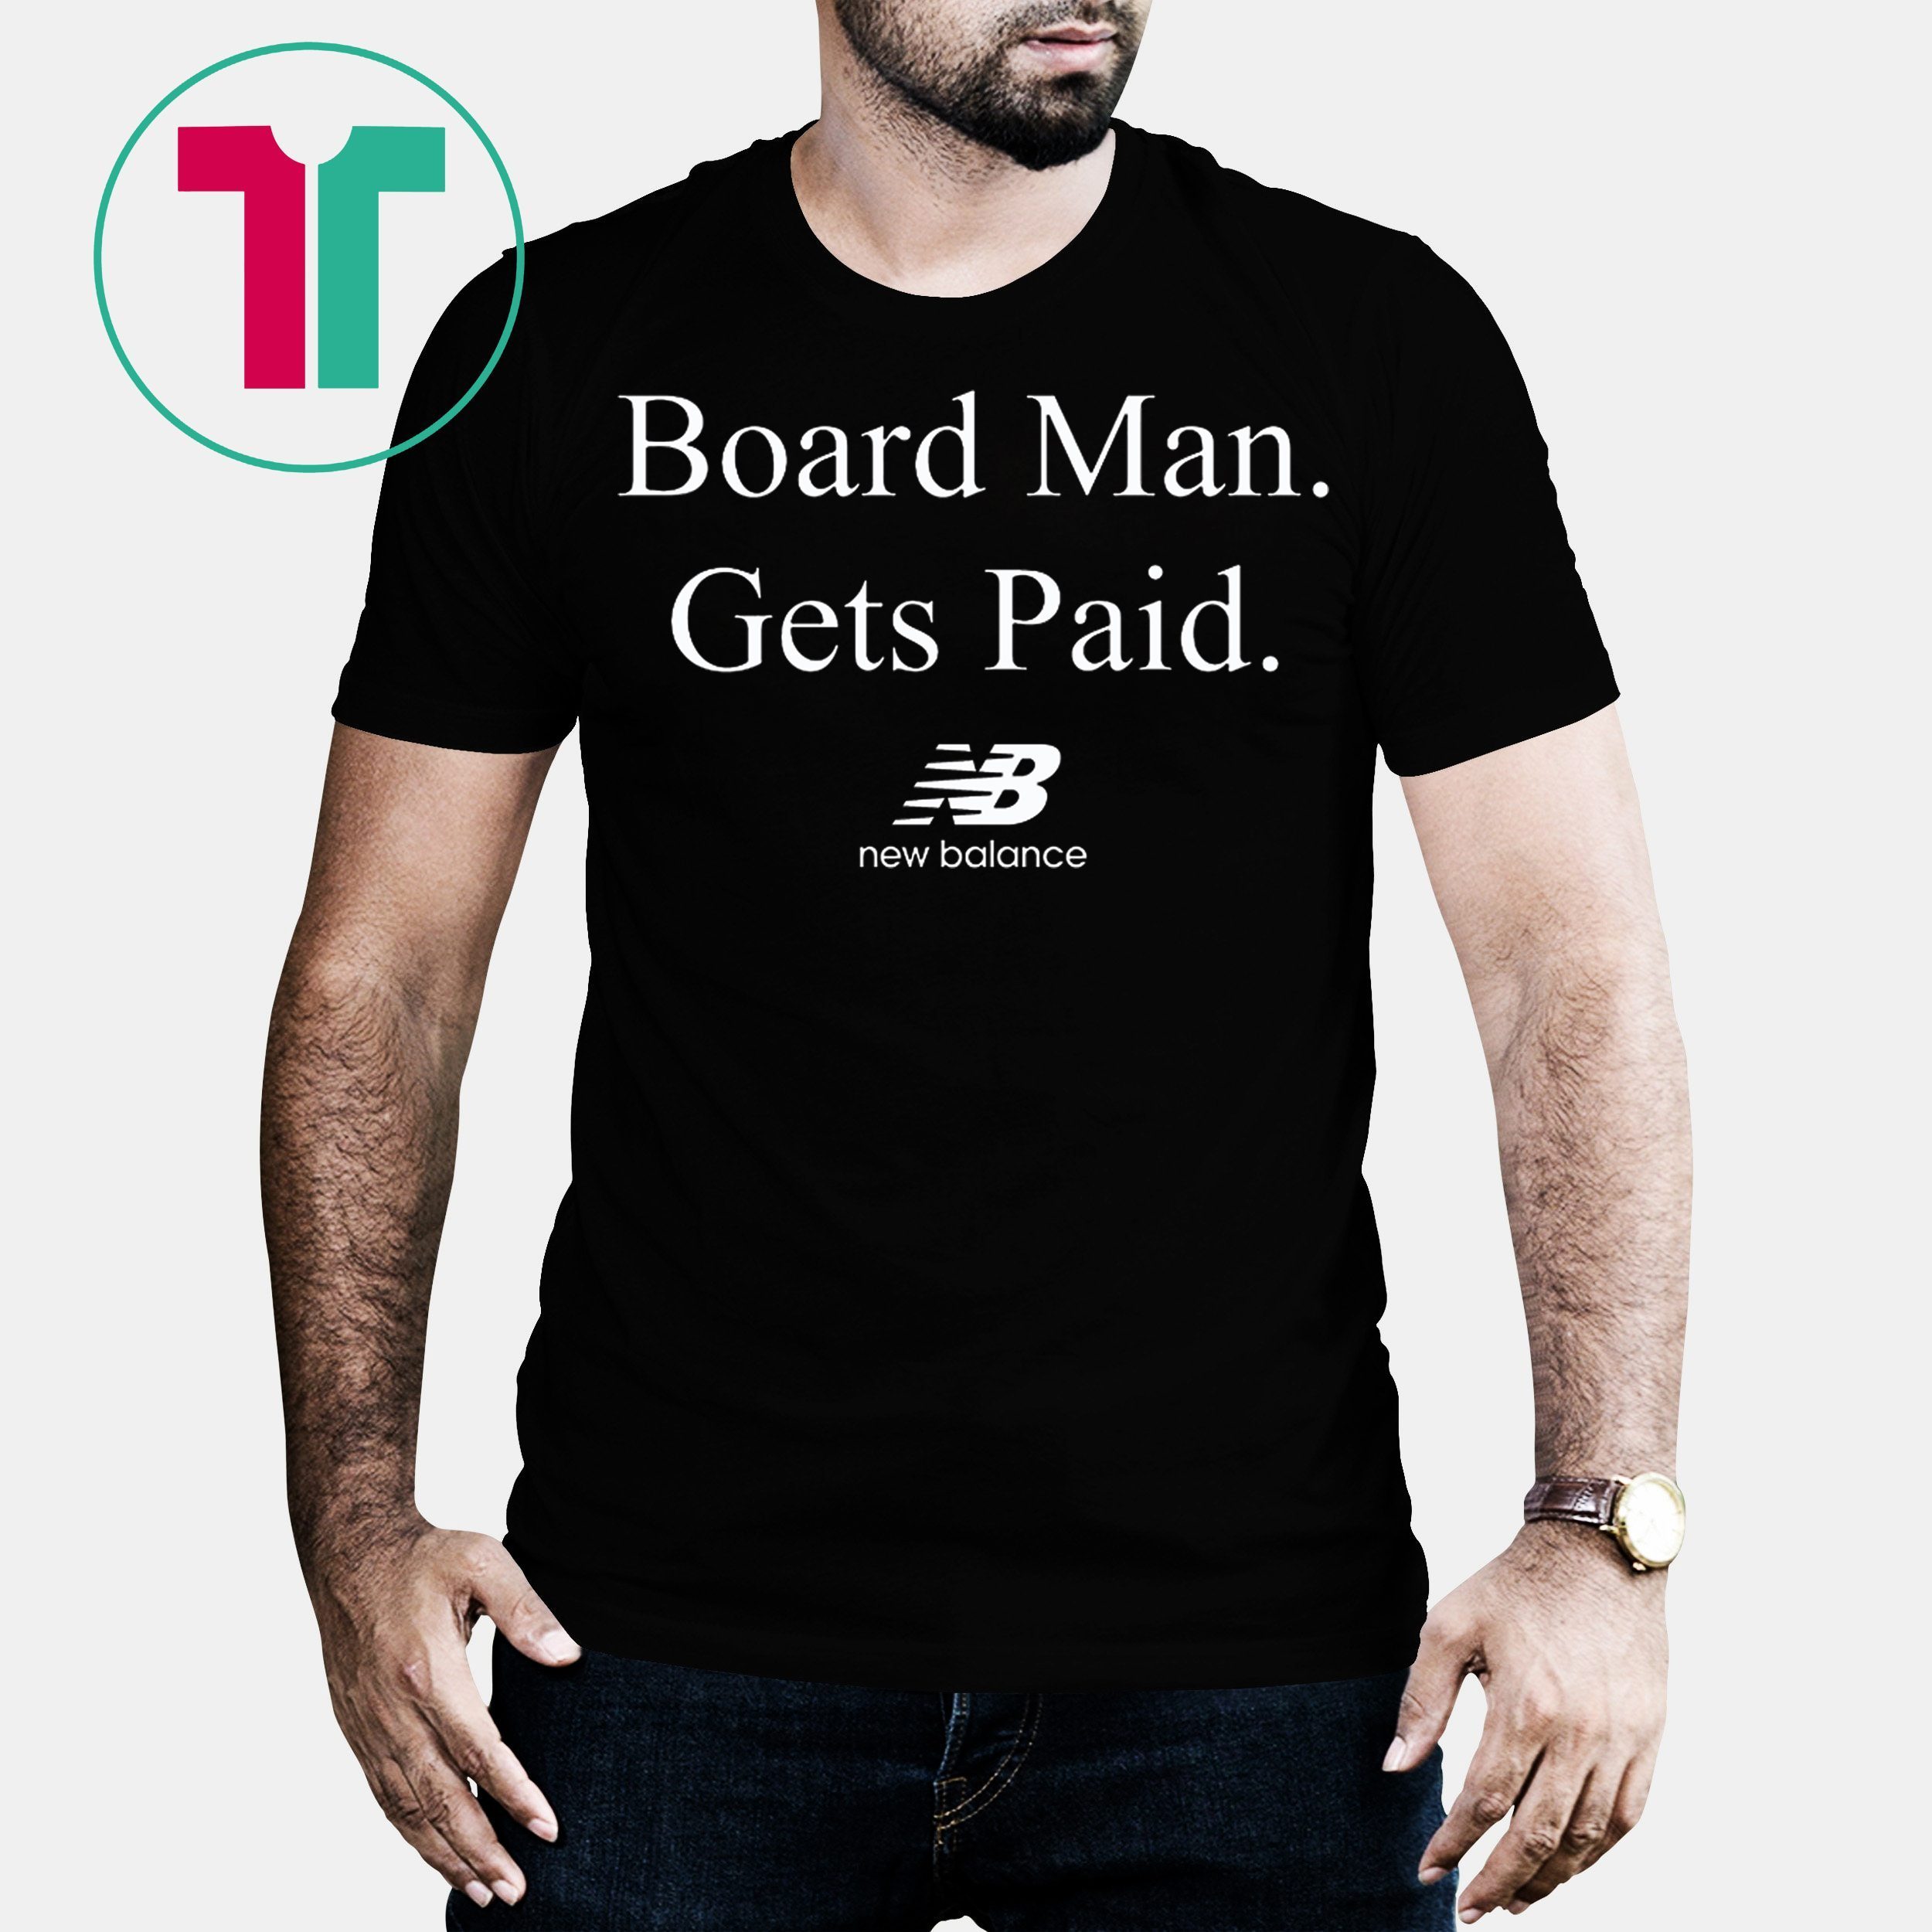 board man gets paid t shirt new balance